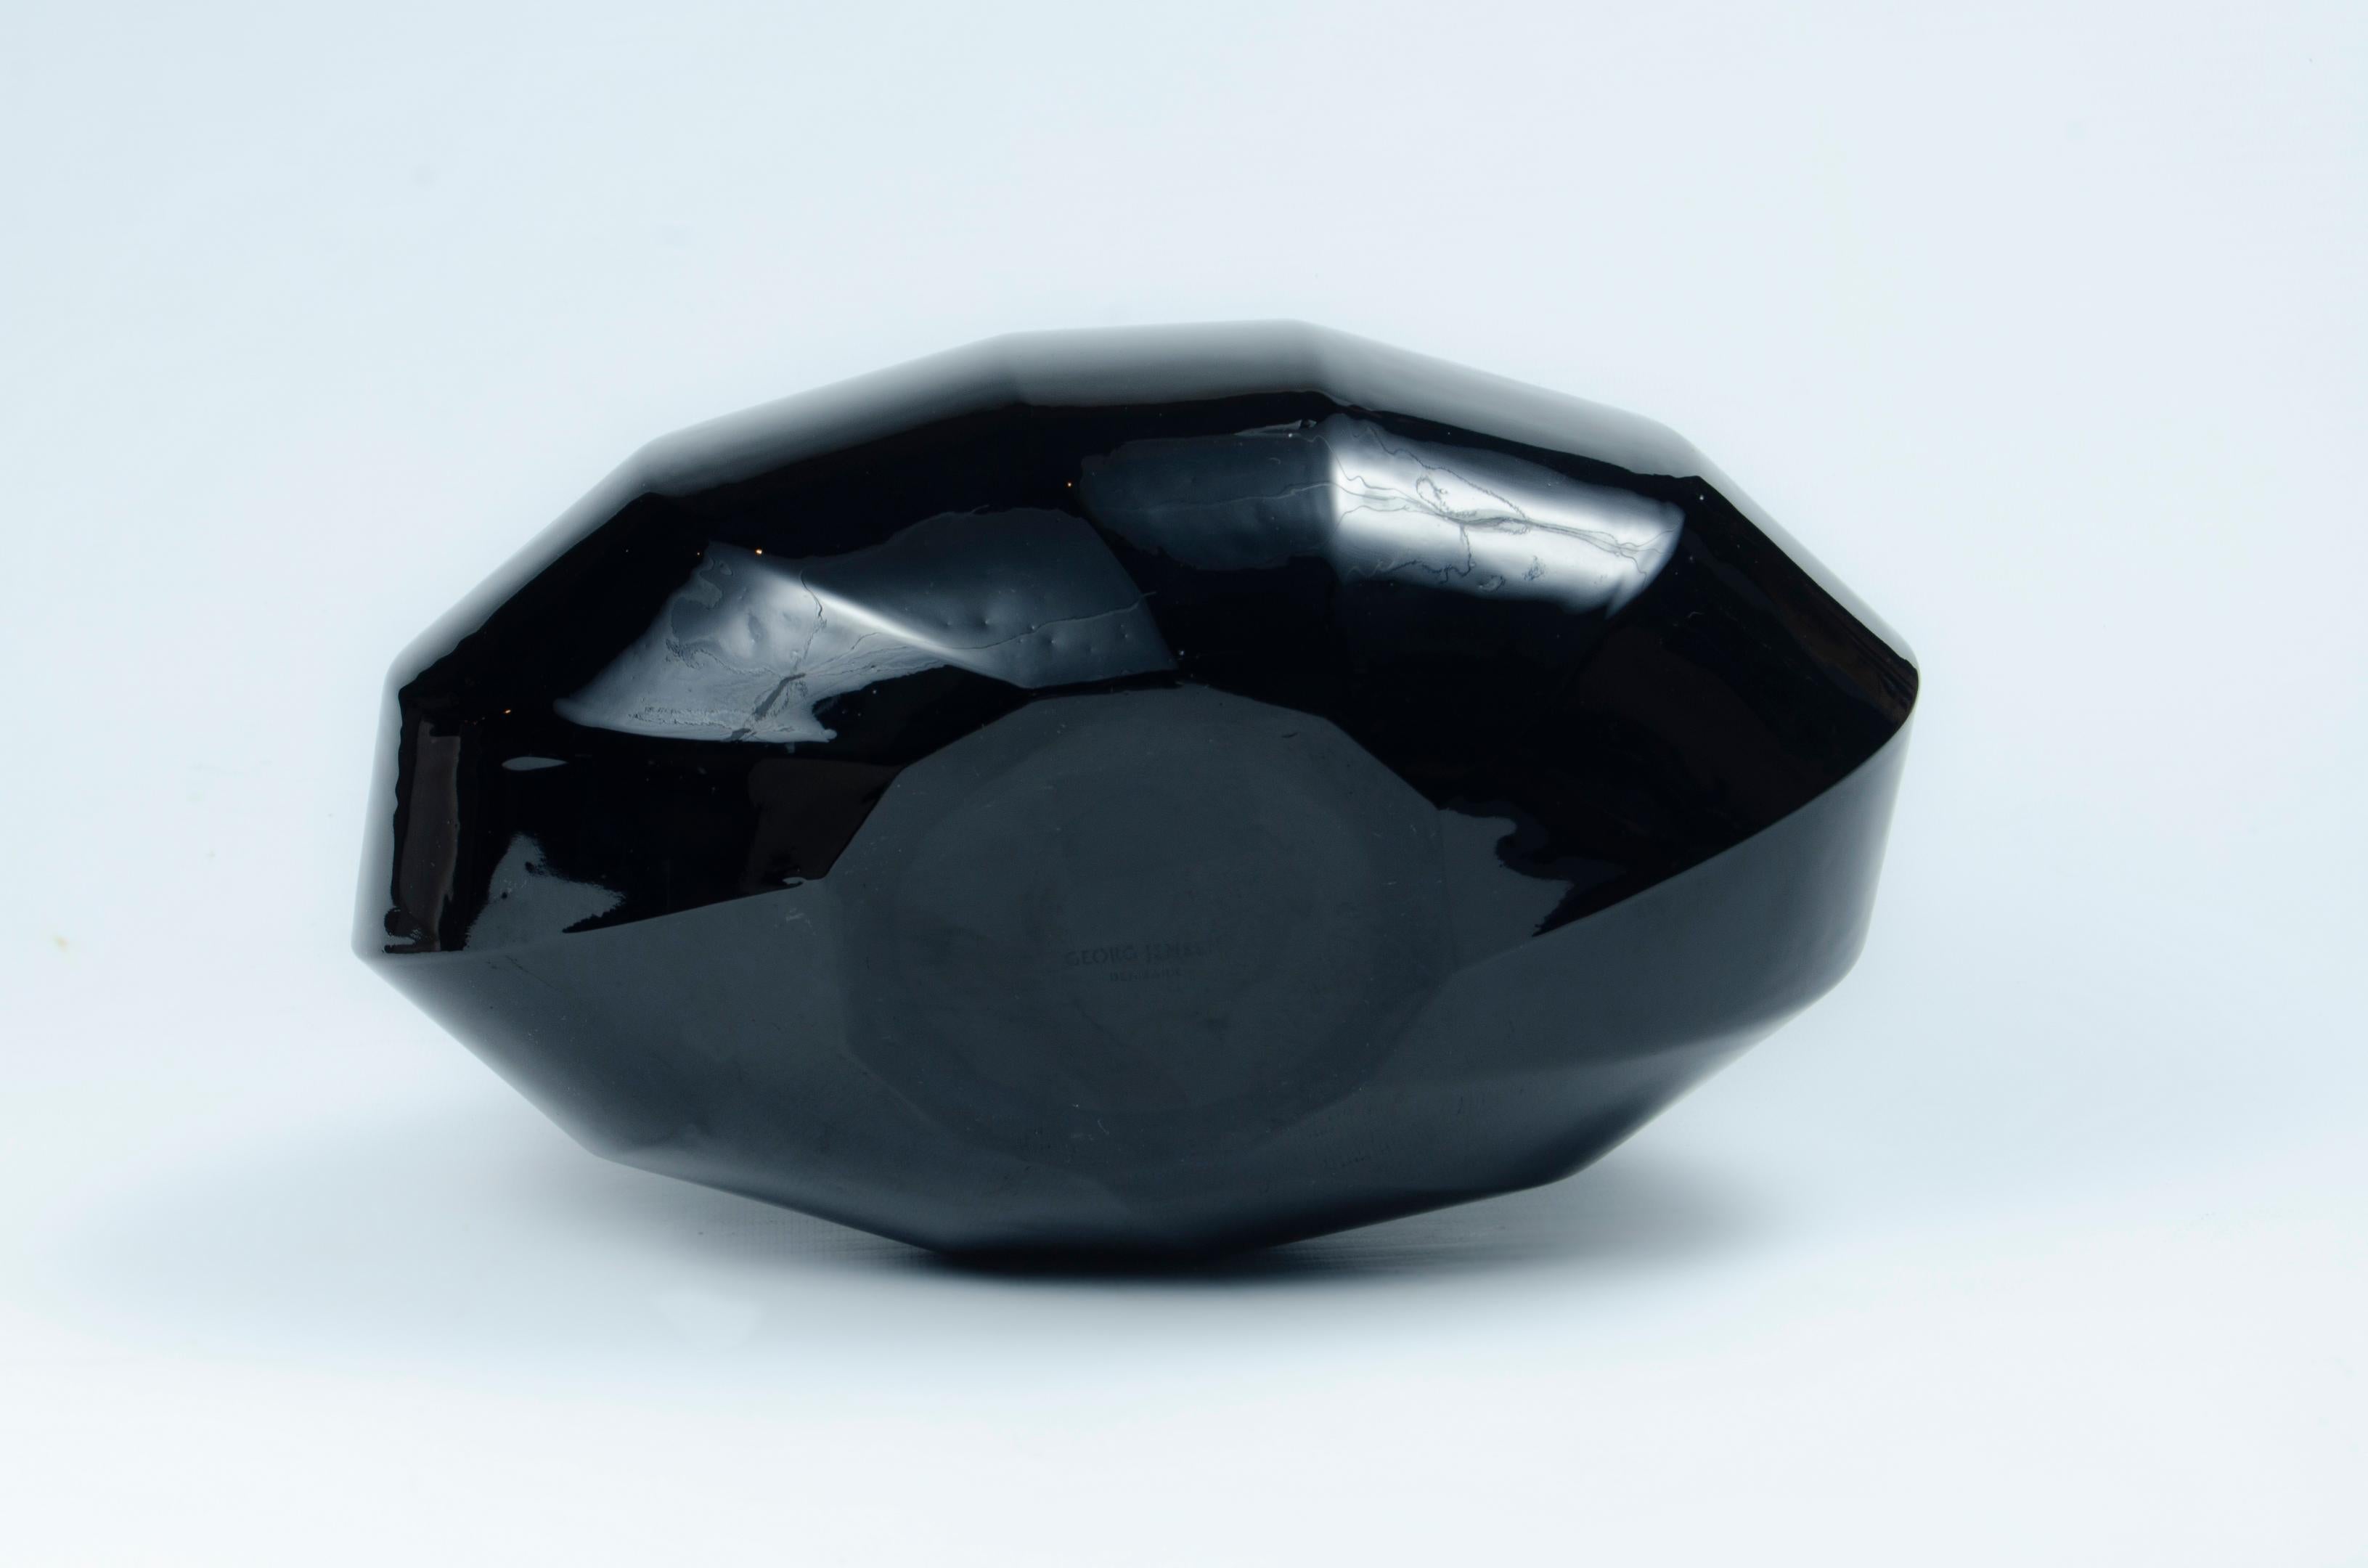 Georg Jensen glass vase
black, faceted,
1960 mid century origin Denmark
George Jensen manufacturing
perfect condition 550 20%.
 